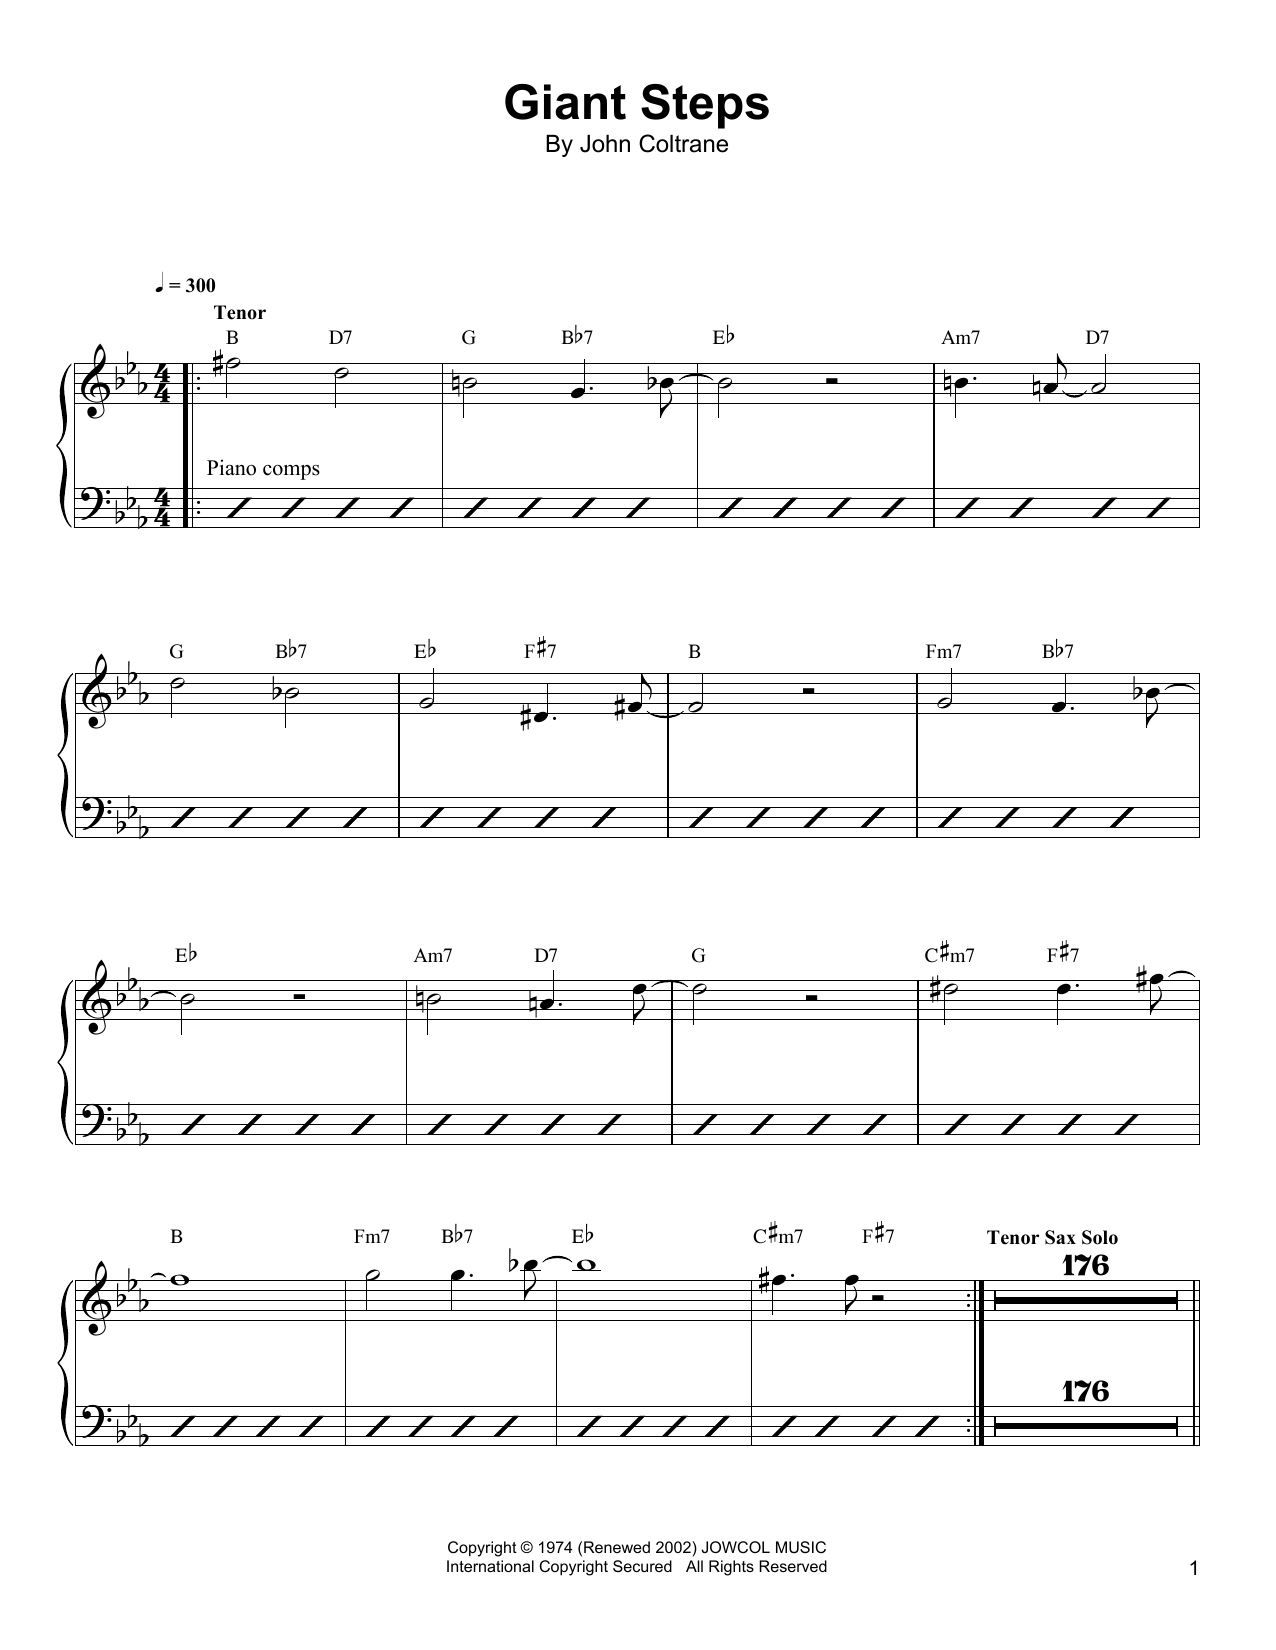 John Coltrane Giant Steps Sheet Music Notes & Chords for Bass Guitar Tab - Download or Print PDF